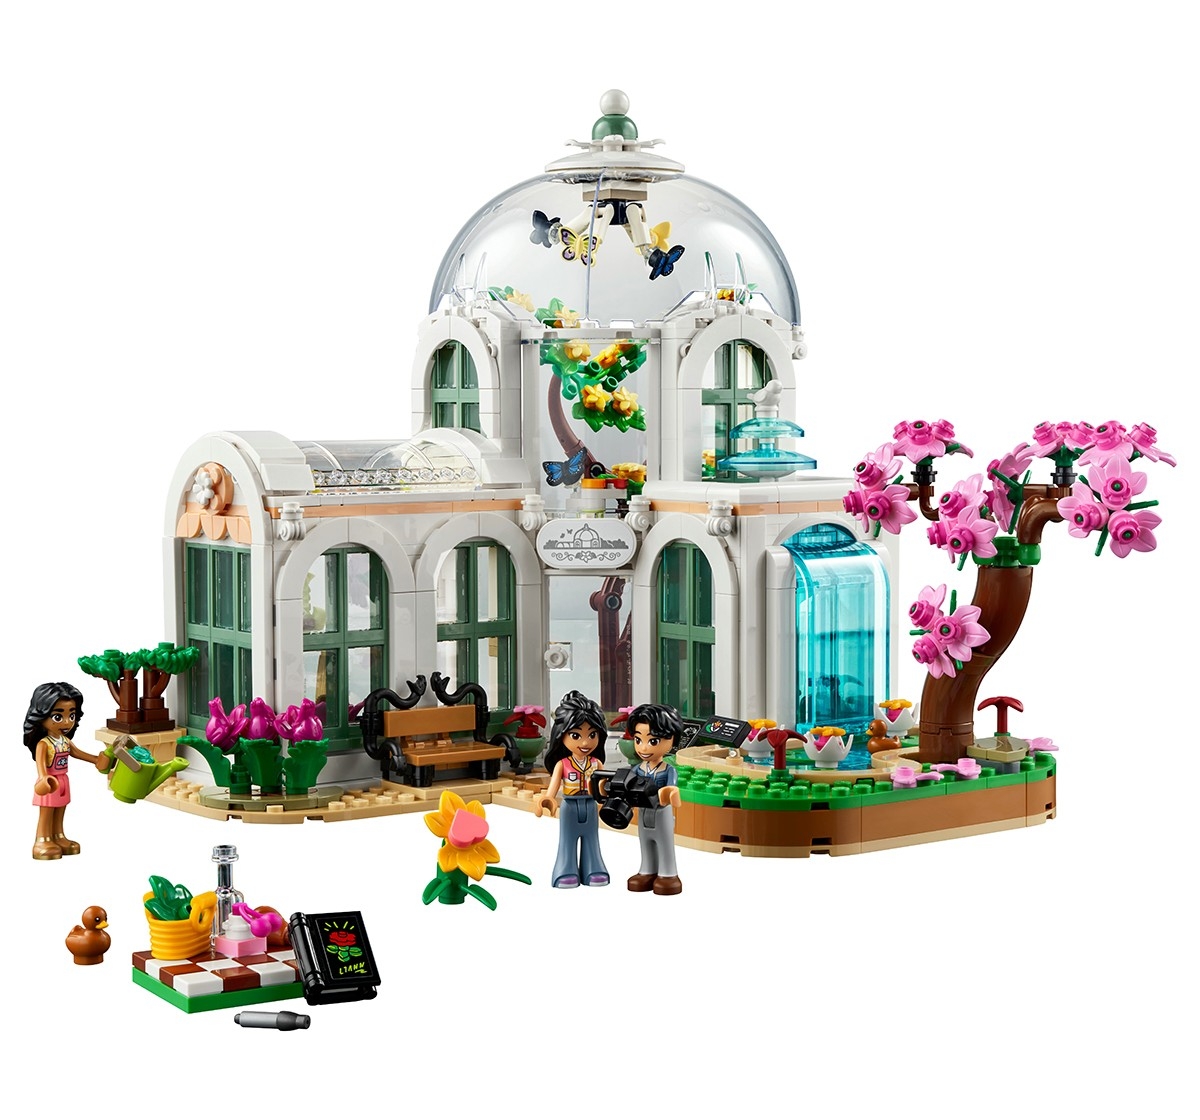 Lego Friends Botanical Garden 41757 Building Toy Set (1,072 Pieces), 12Y+